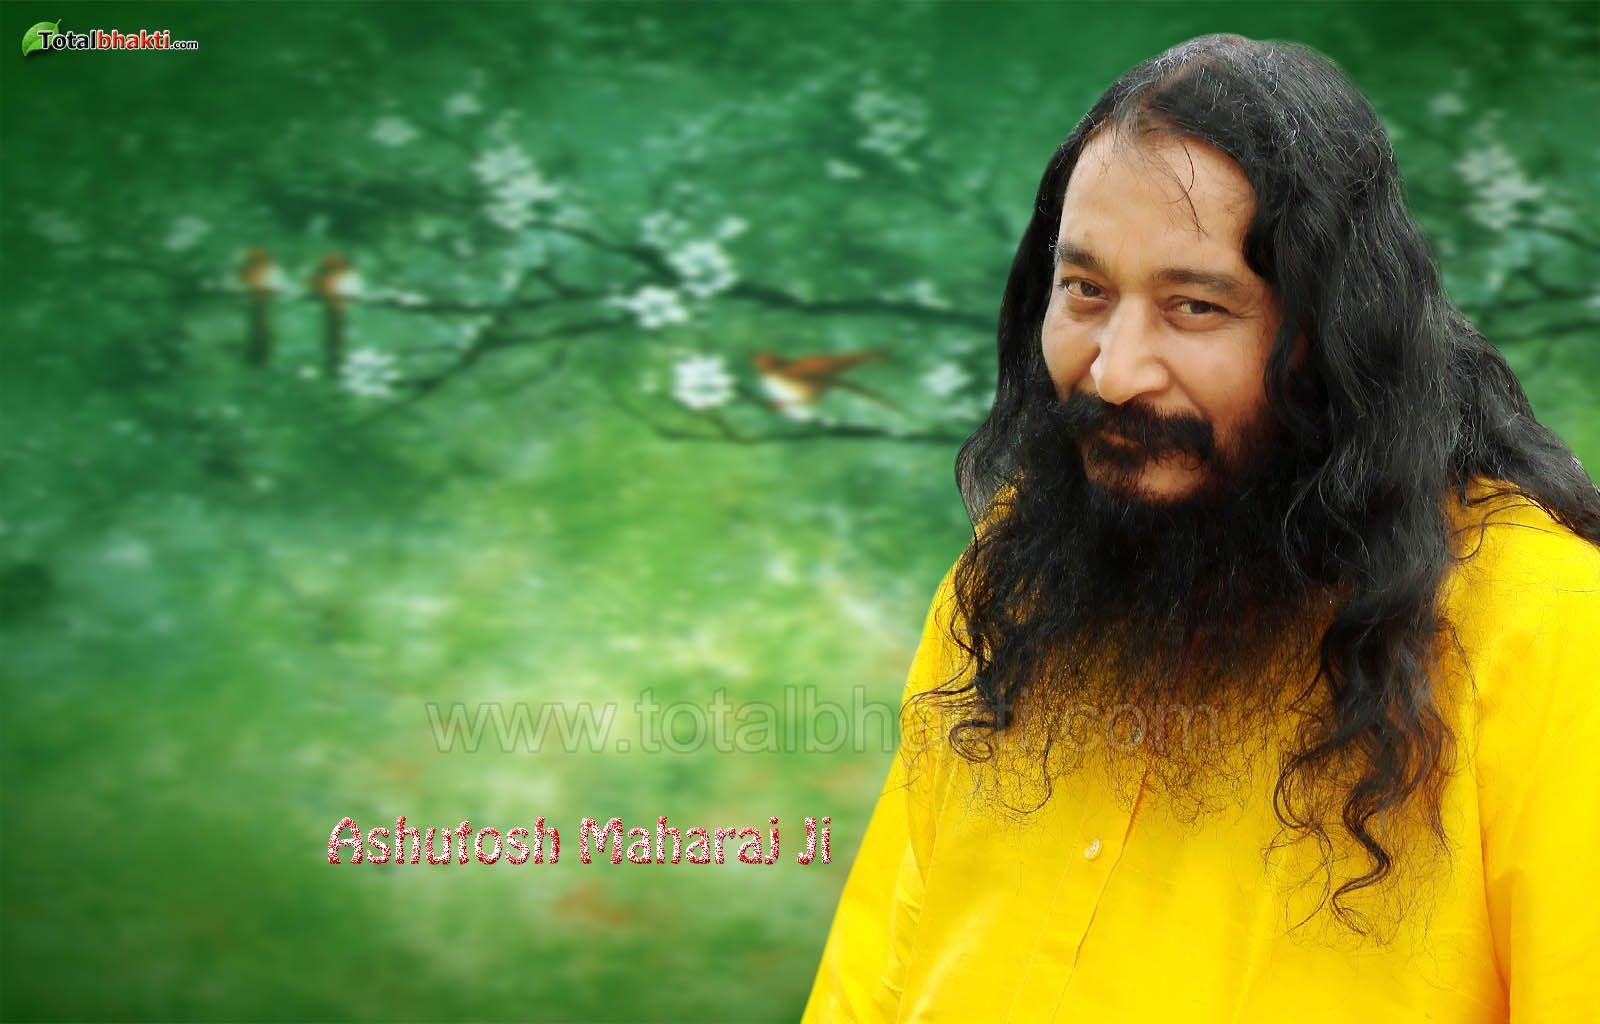 ashutosh name wallpaper,beard,facial hair,long hair,guru,plant